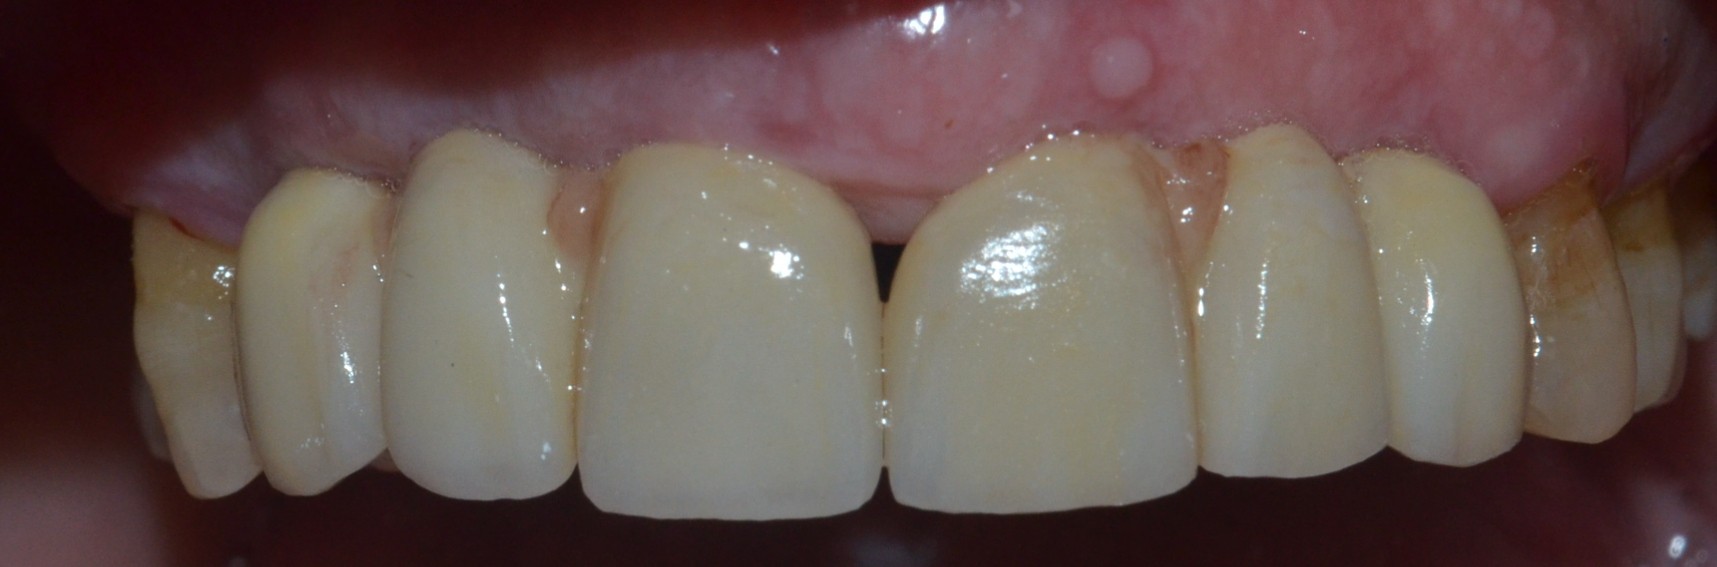 Crowns on dental implants